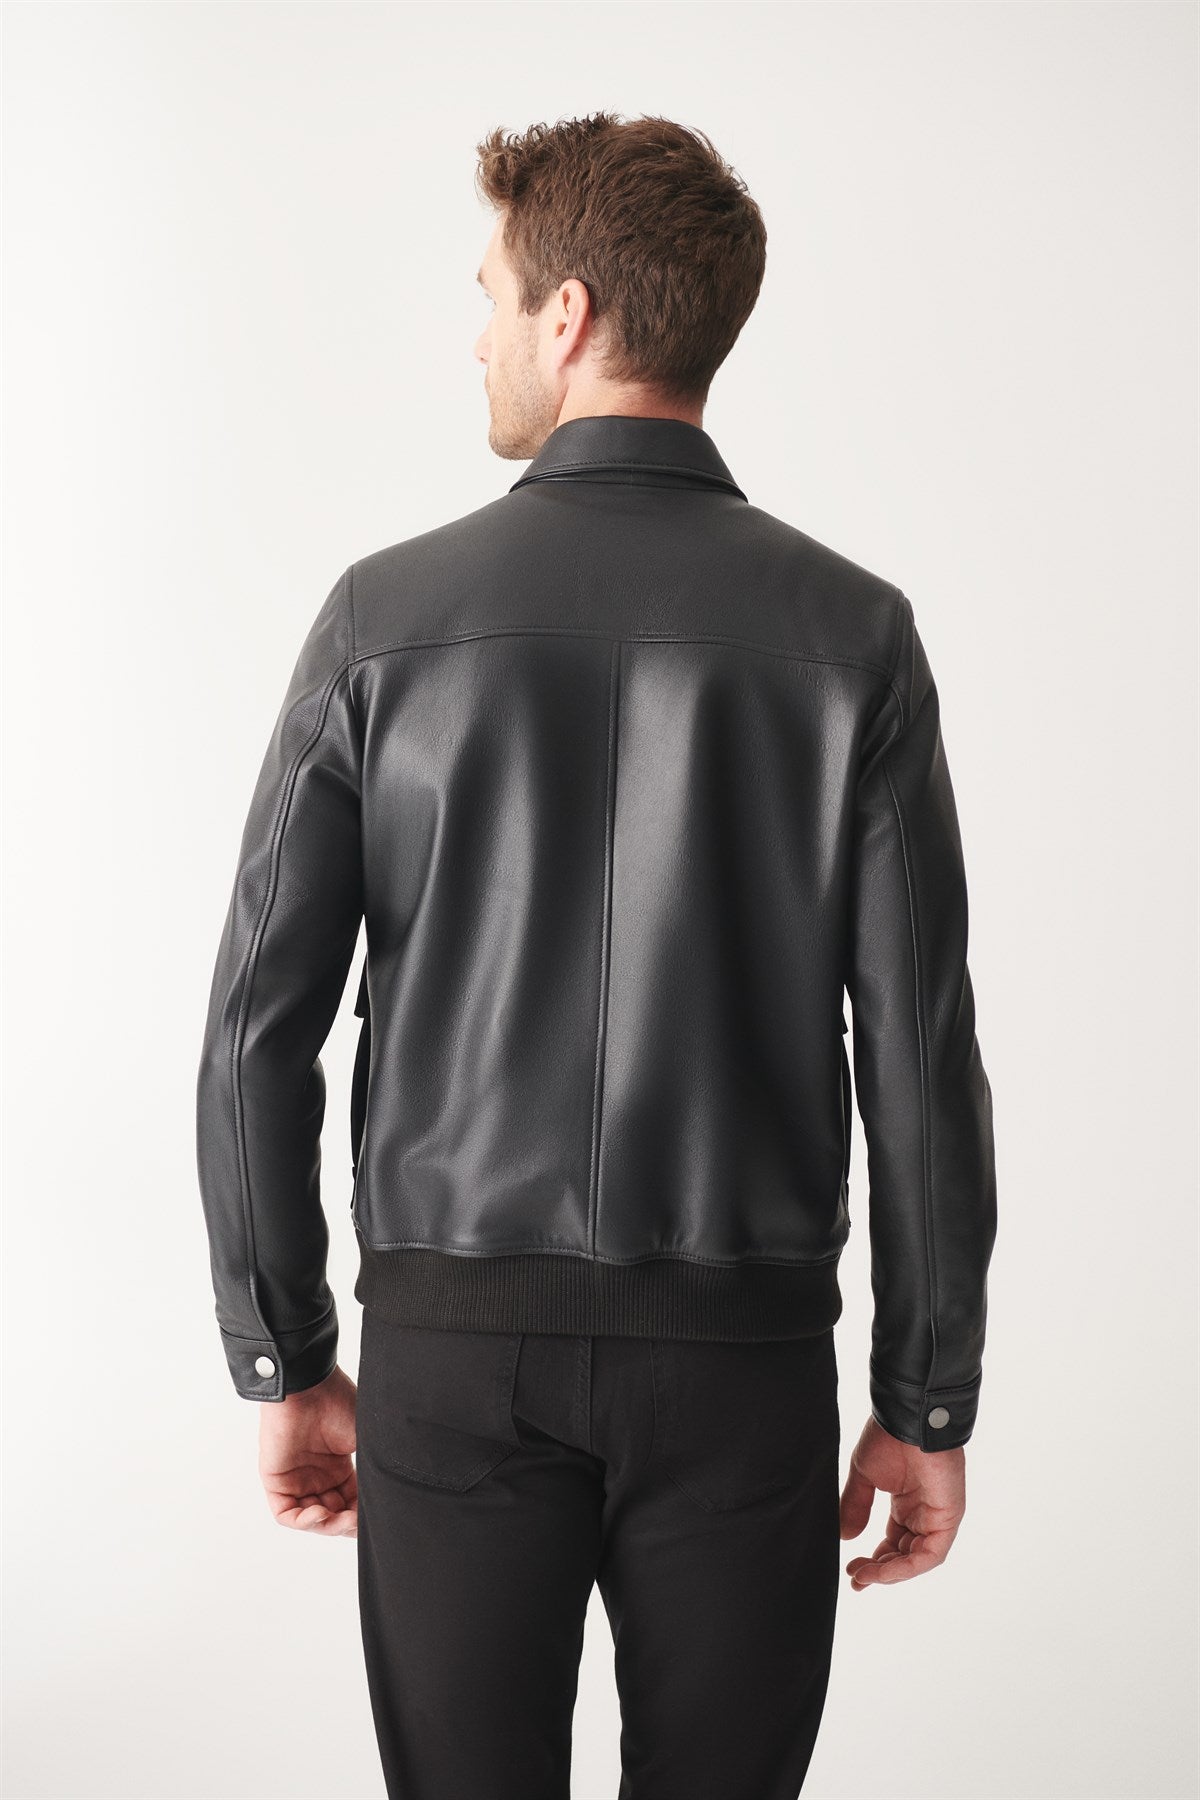 Black Bomber Leather Jacket for Men - LJ